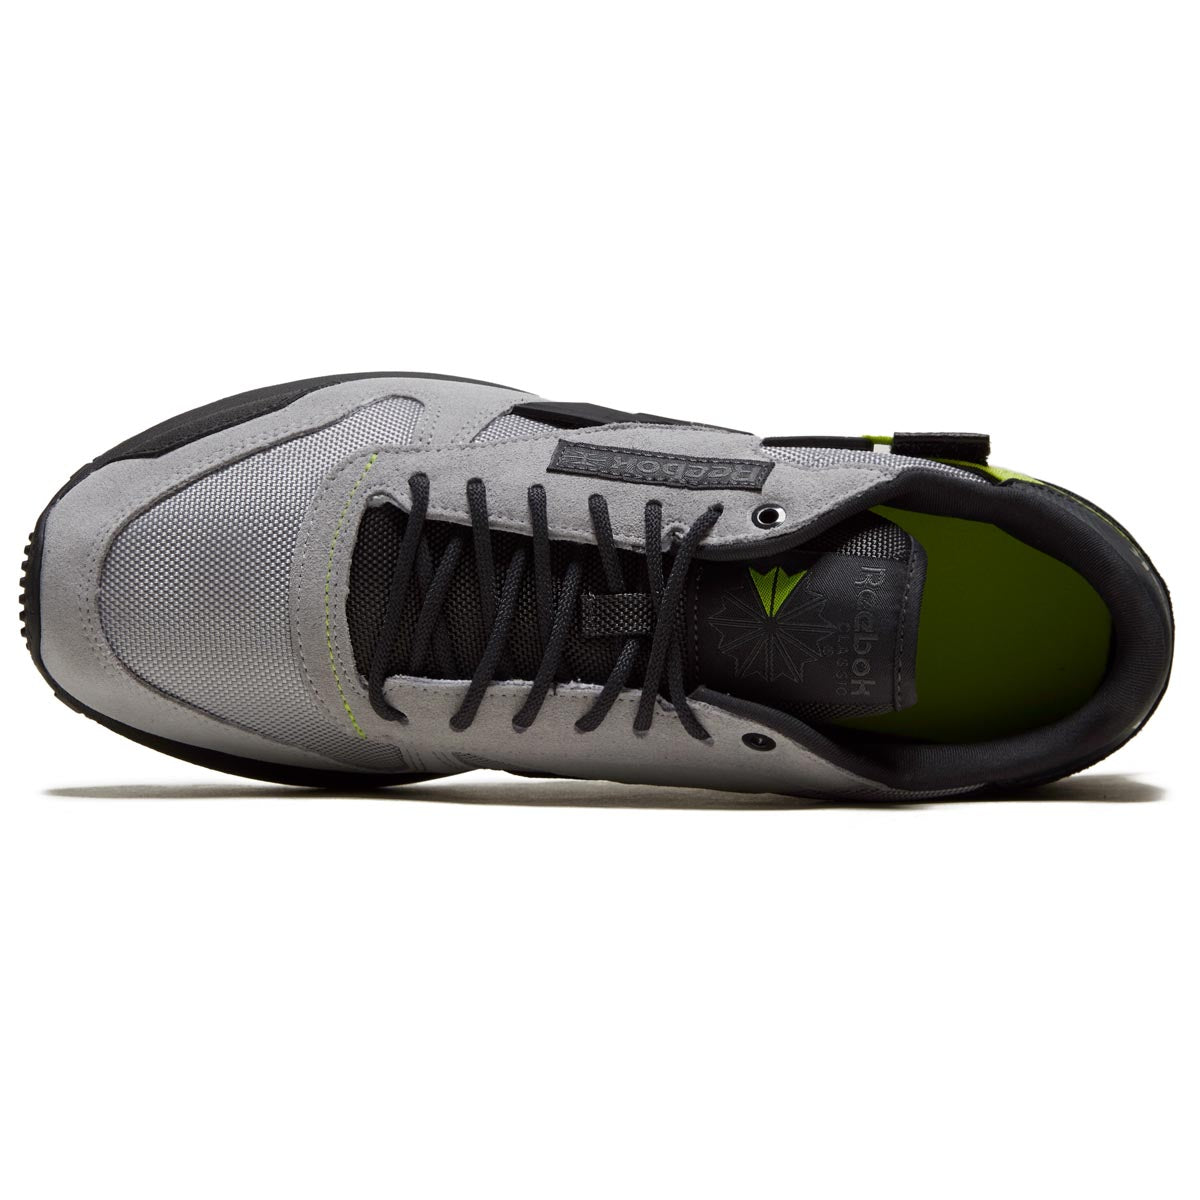 Reebok Classic Leather Winterized Shoes - Grey/Grey/Black image 3